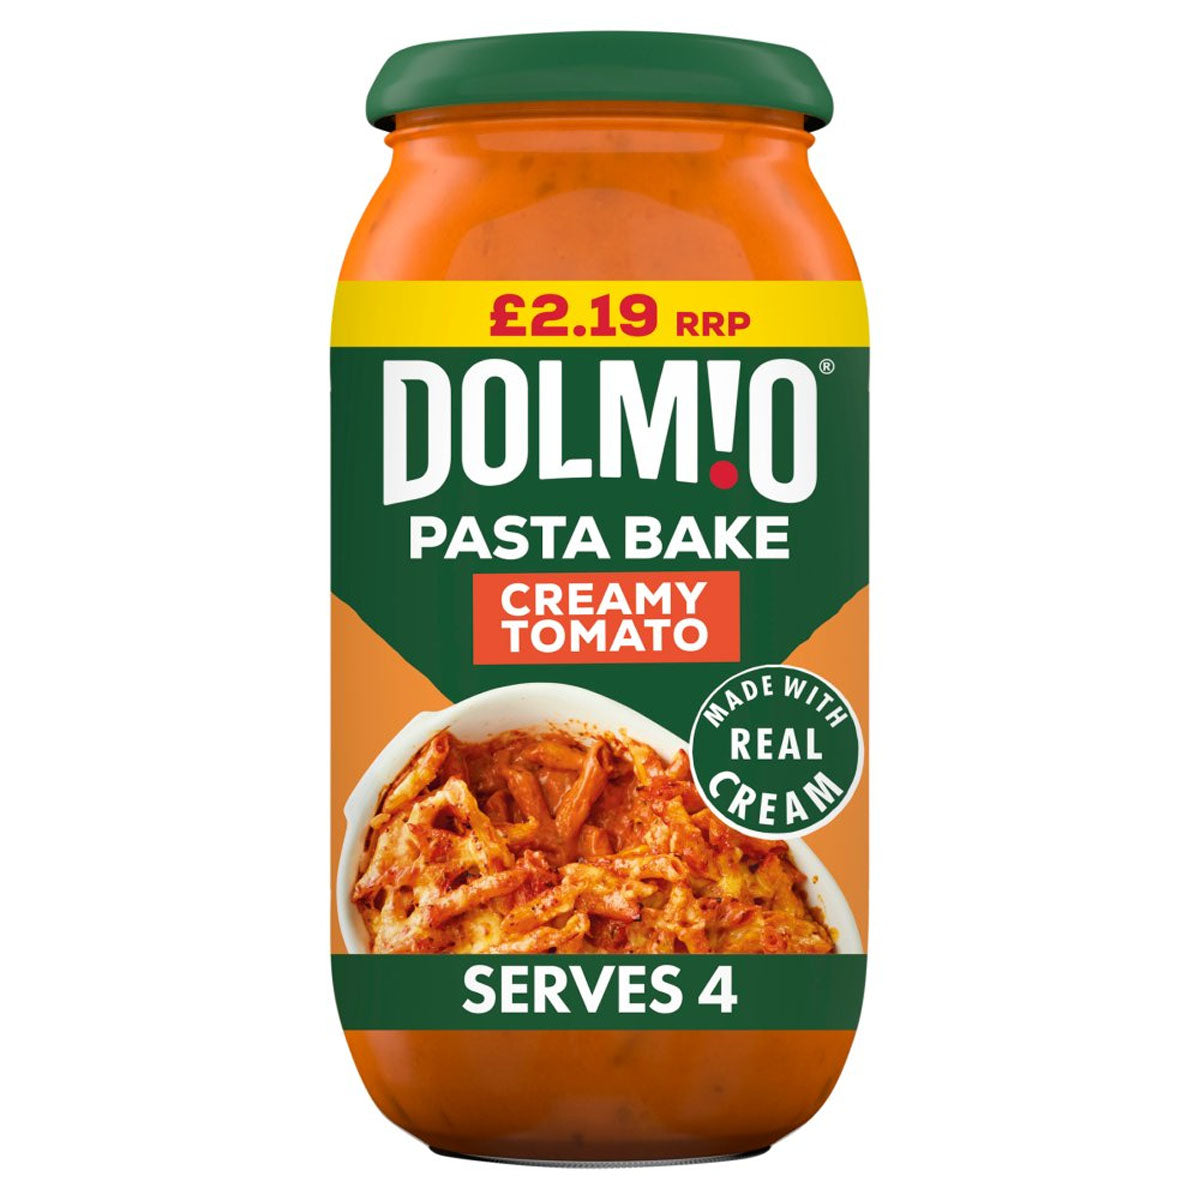 A jar of Dolmio - Pasta Bake Creamy Tomato Pasta Sauce - 500g.